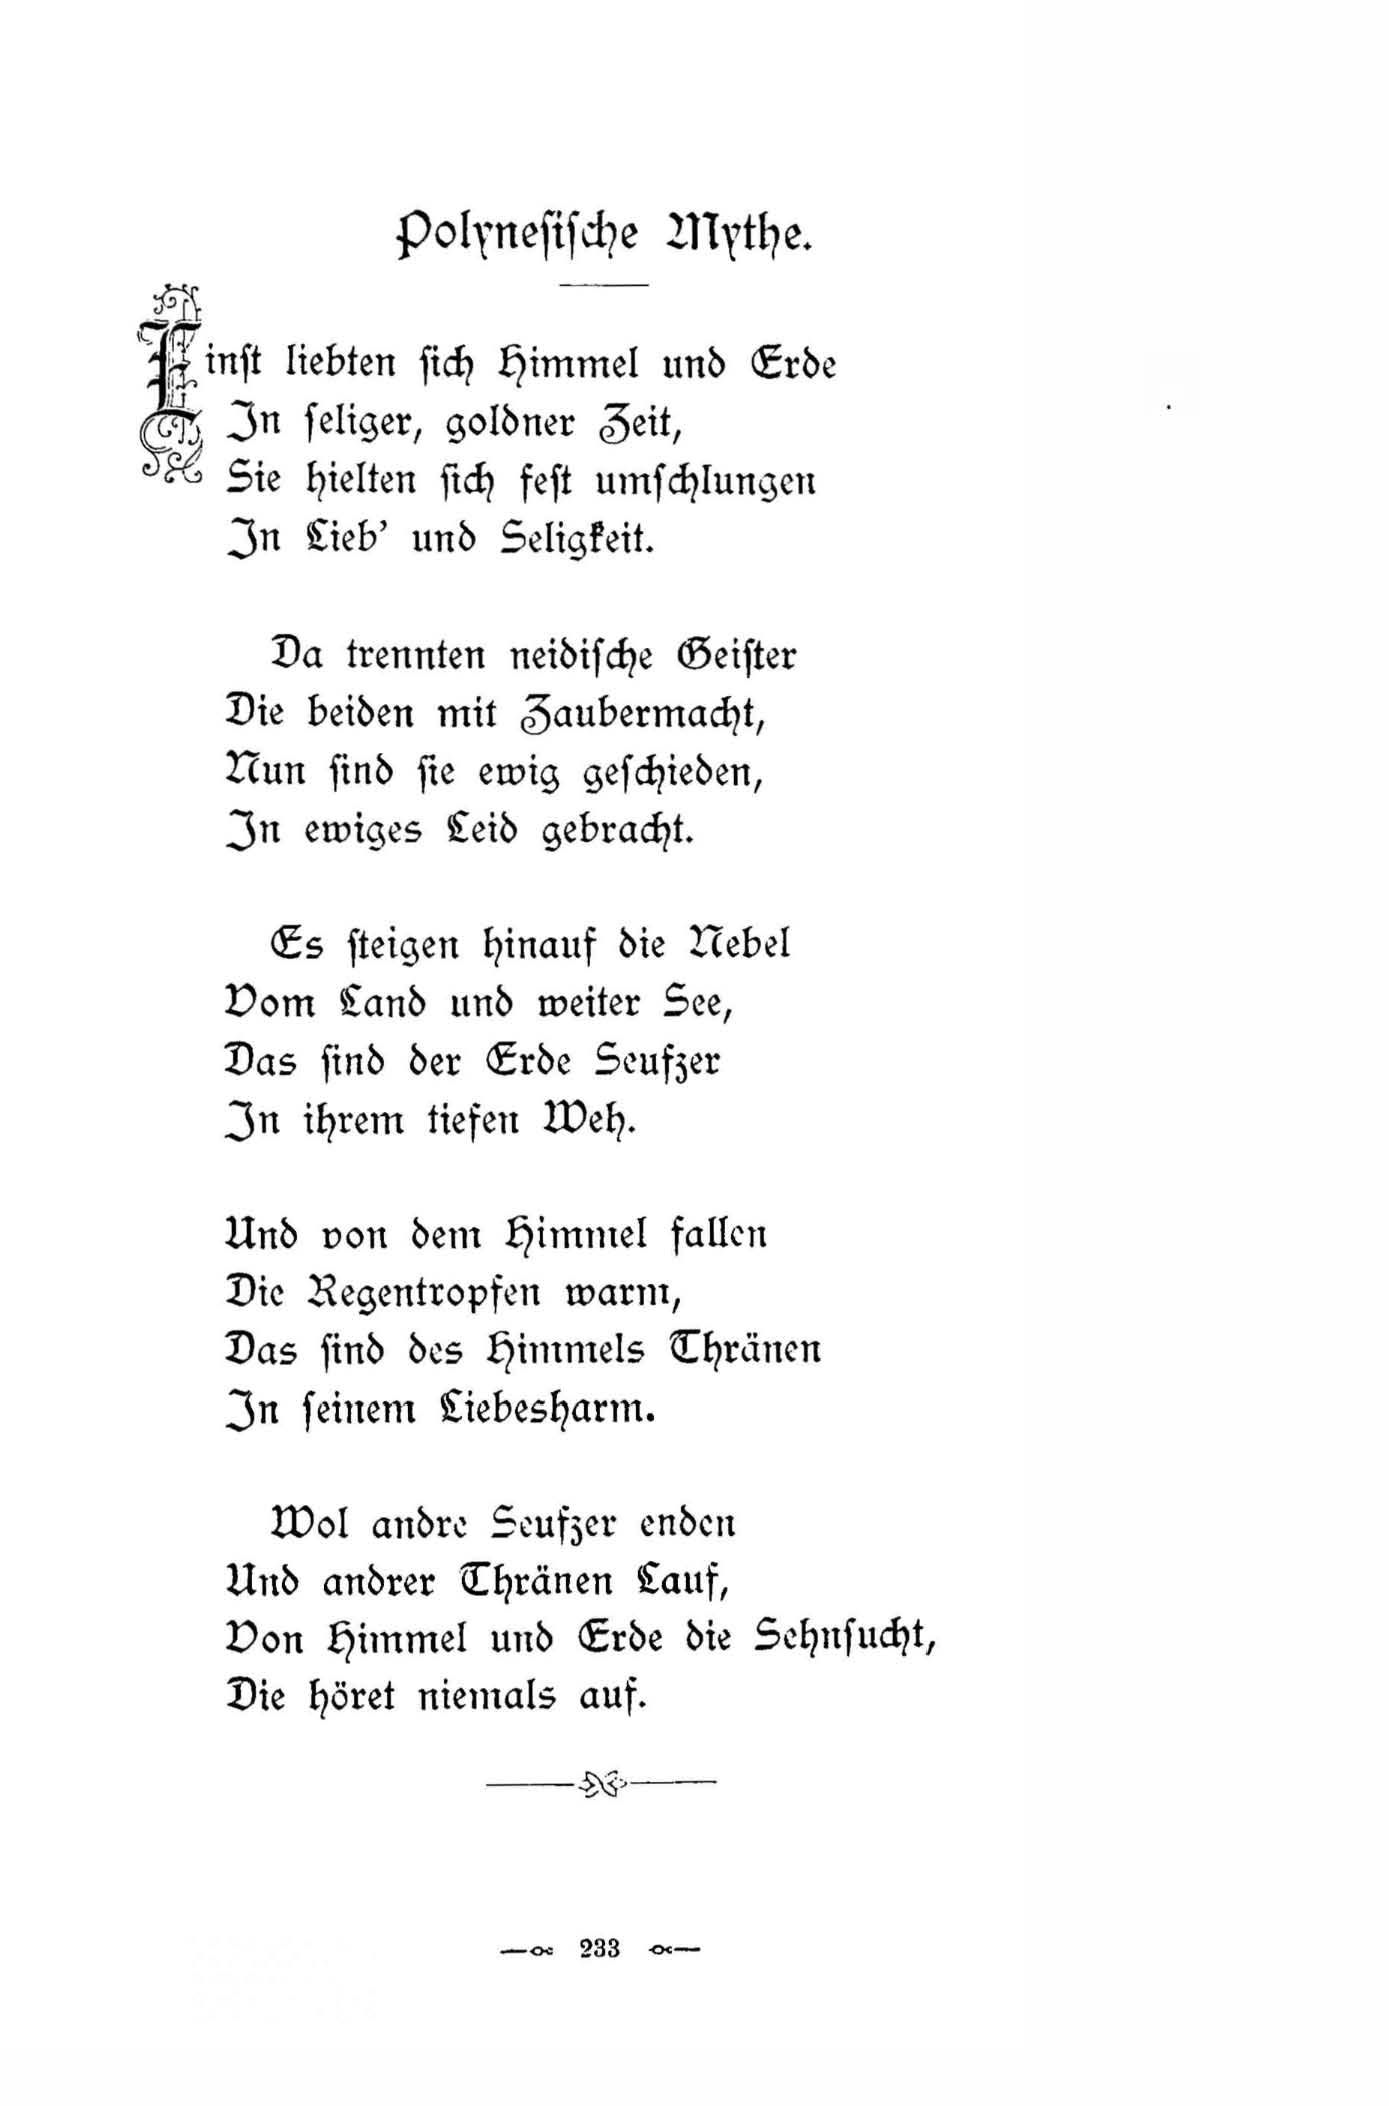 Polynesische Mythe (1896) | 1. (233) Основной текст